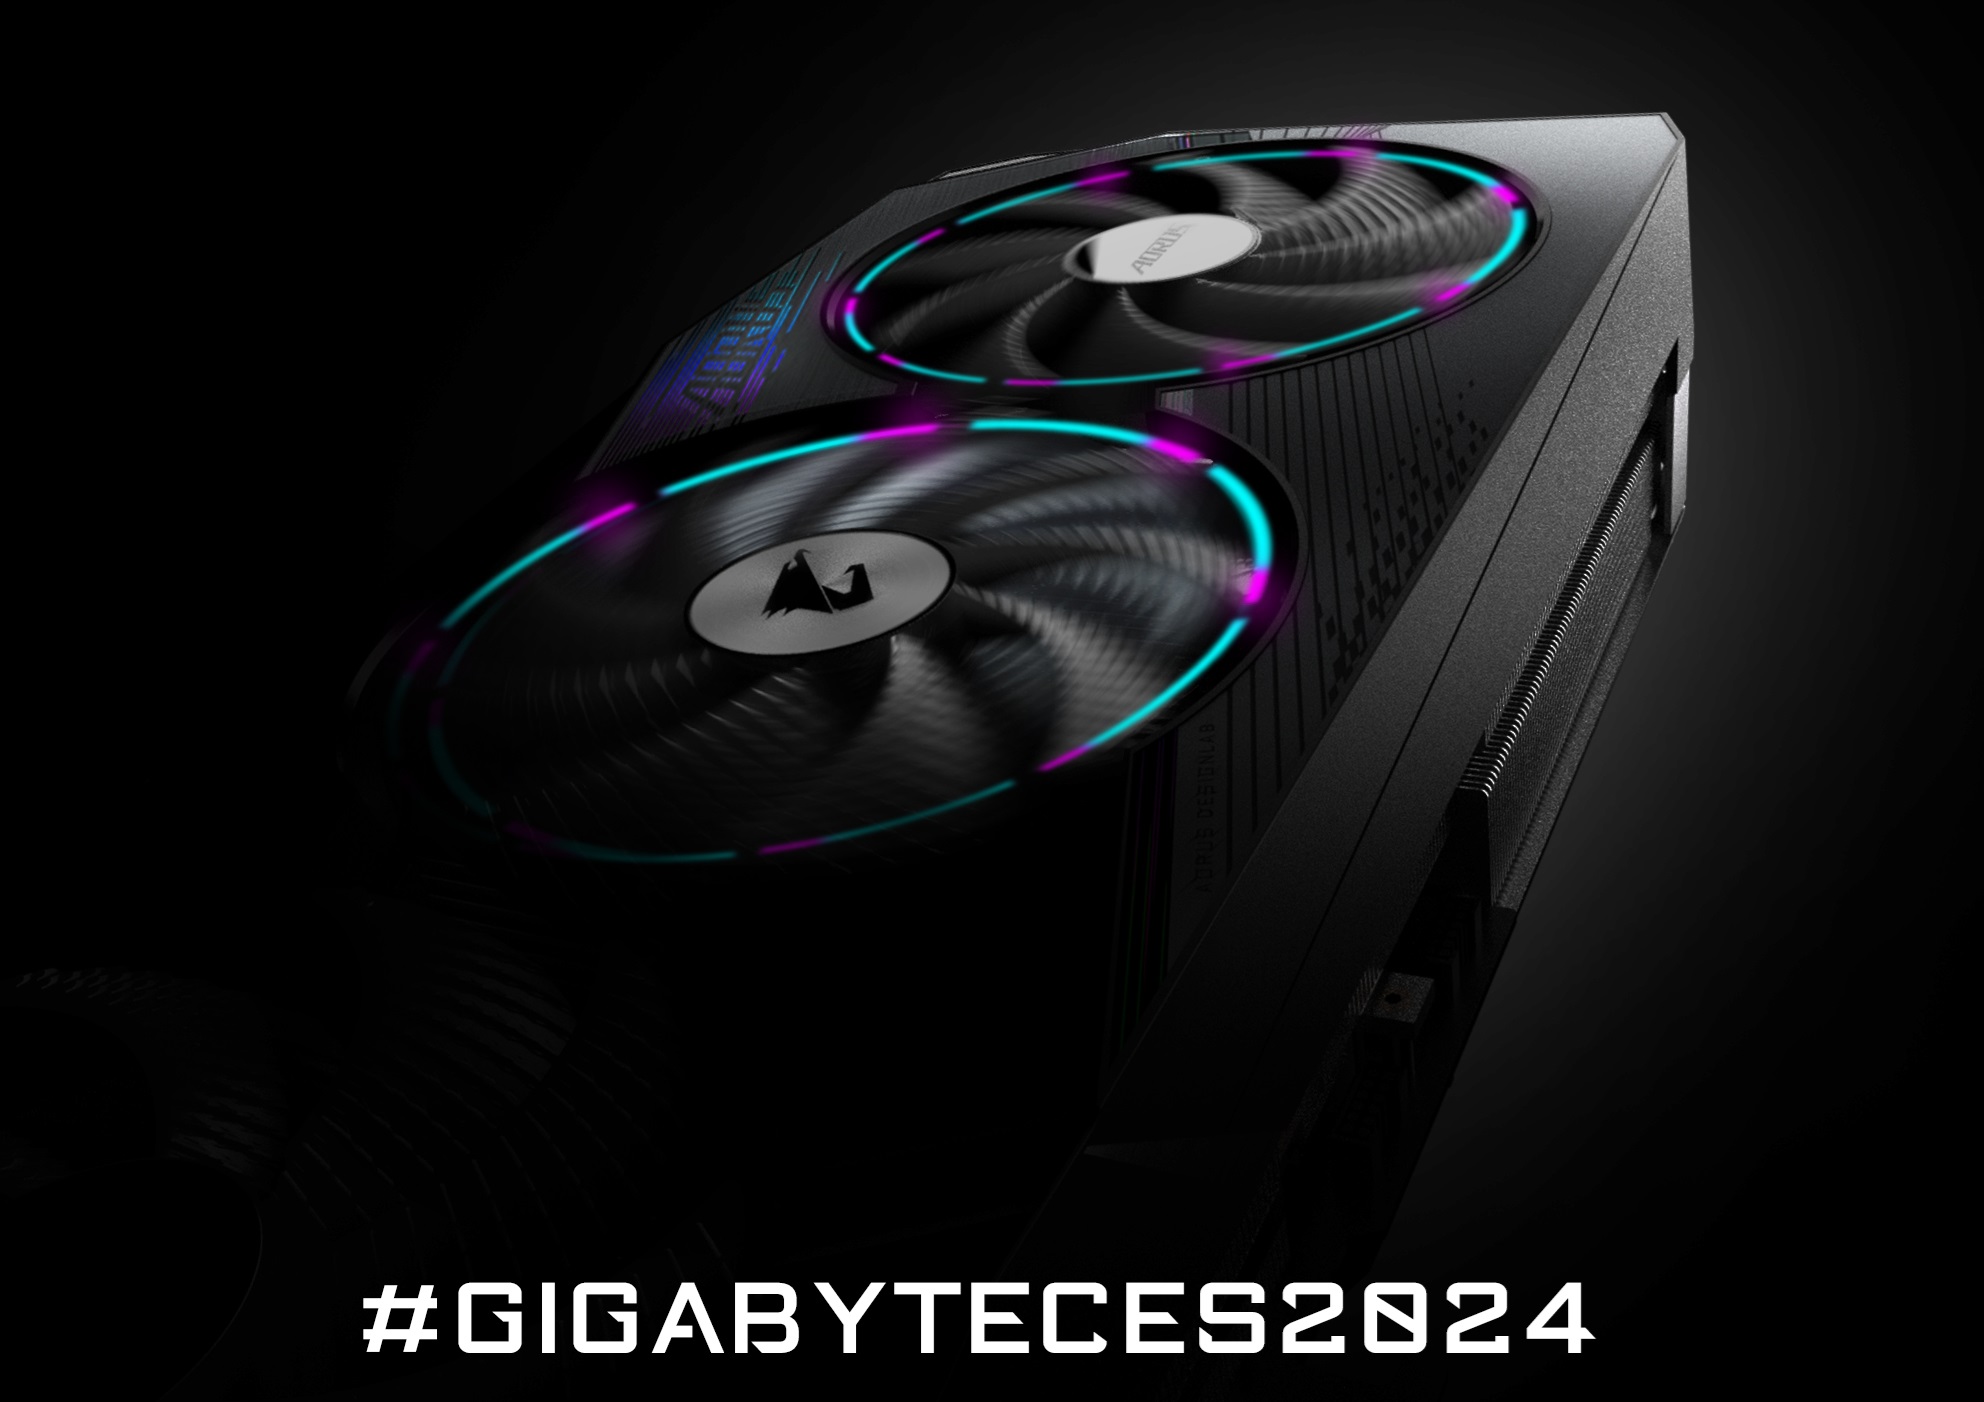 Gigabyte teaser suggests CES 2024 GPU reveals